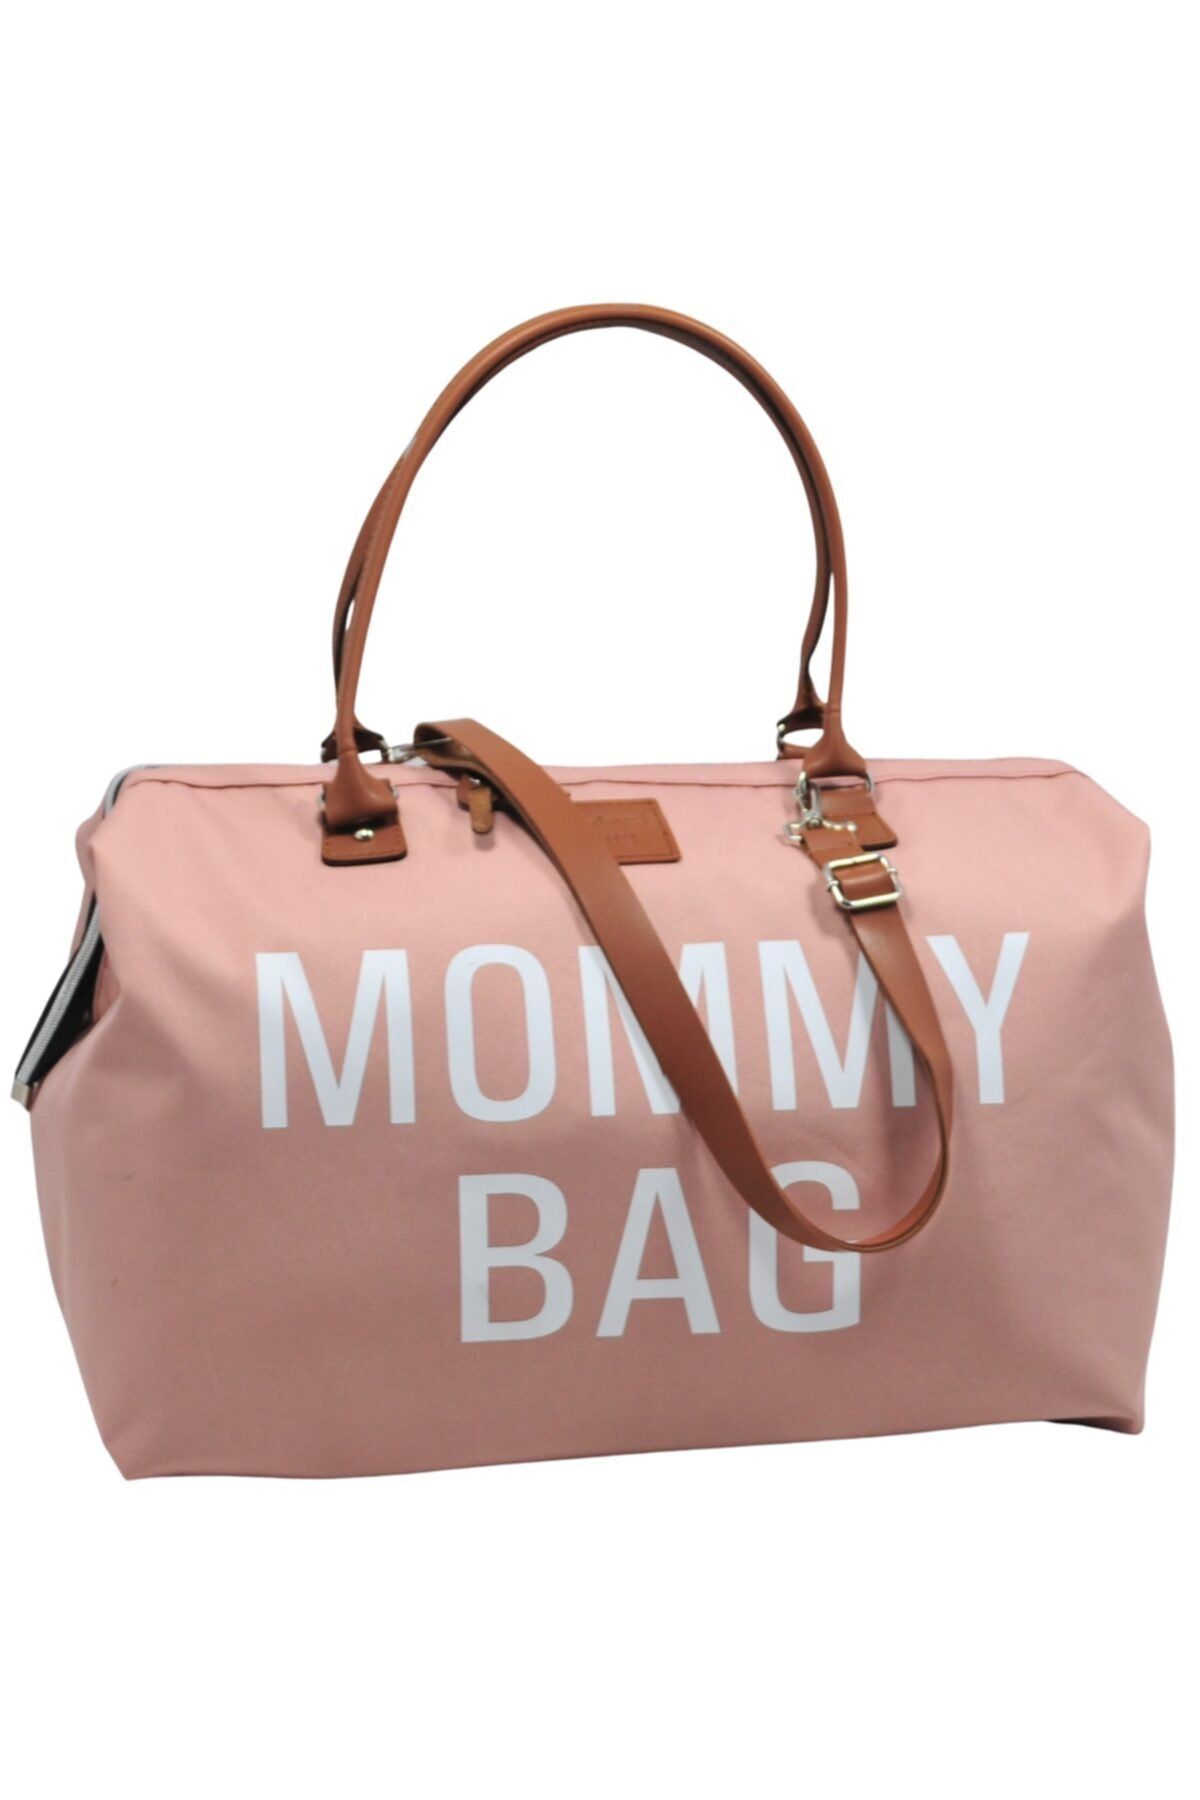 Babysi Baby Care Bag - Pink - Textile